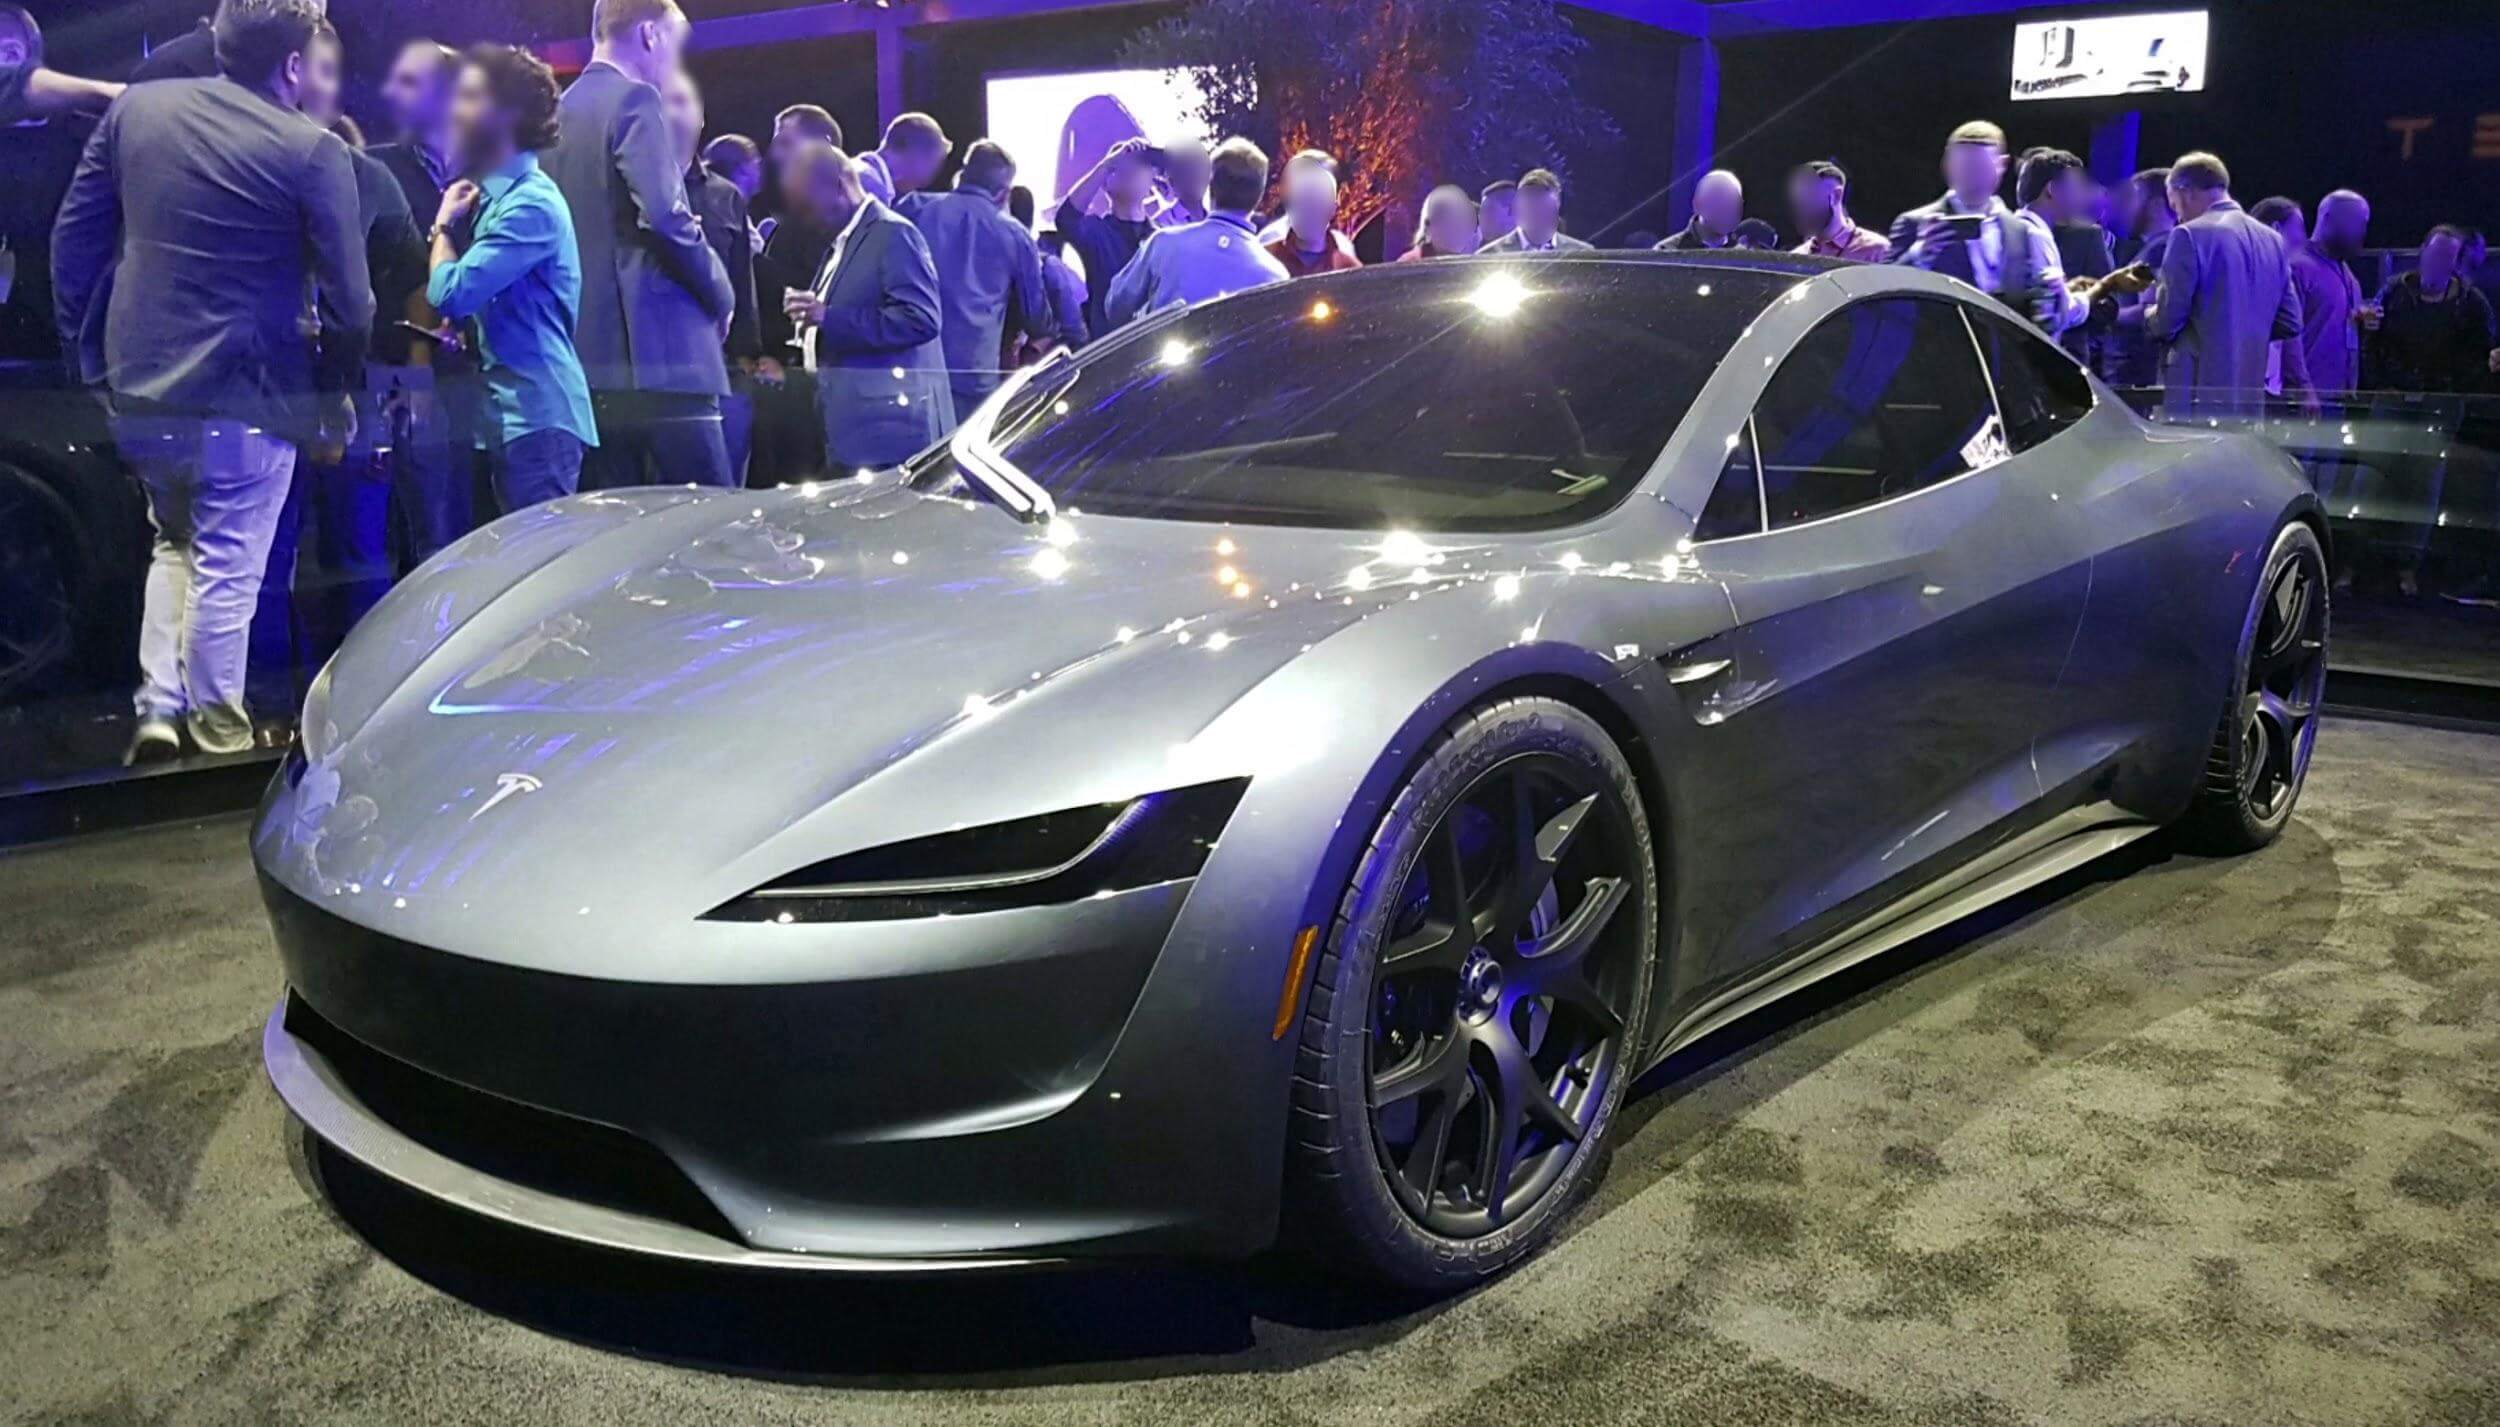 A Tesla Car, the Roadster